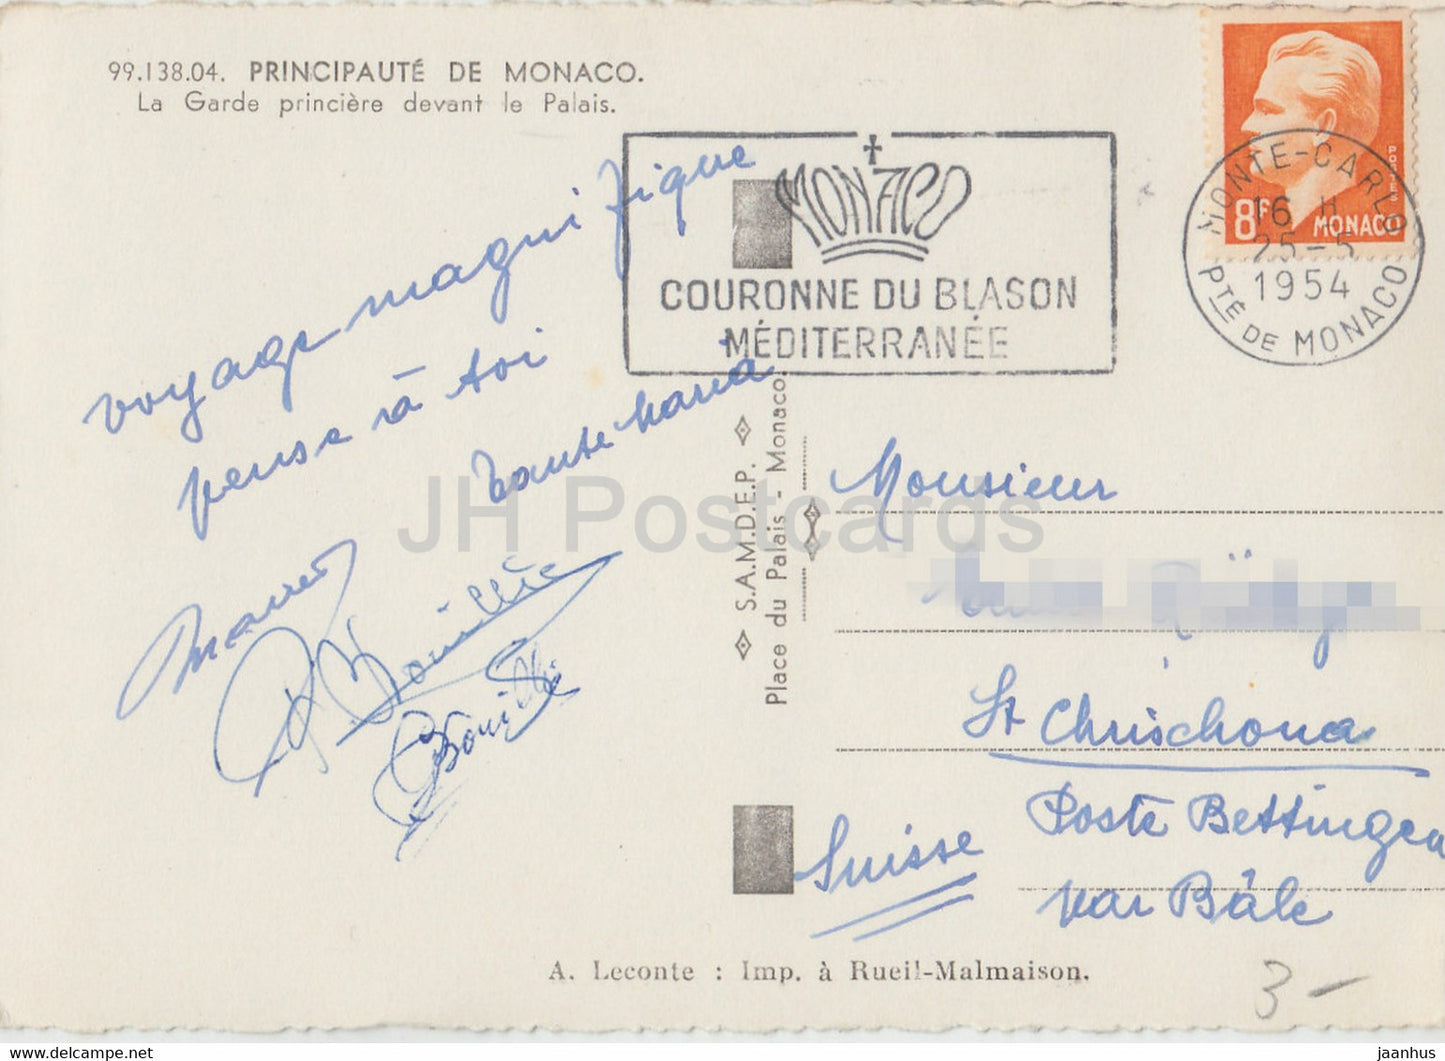 La Garde princiere devant le Palais - alte Postkarte - 1954 - Monaco - gebraucht